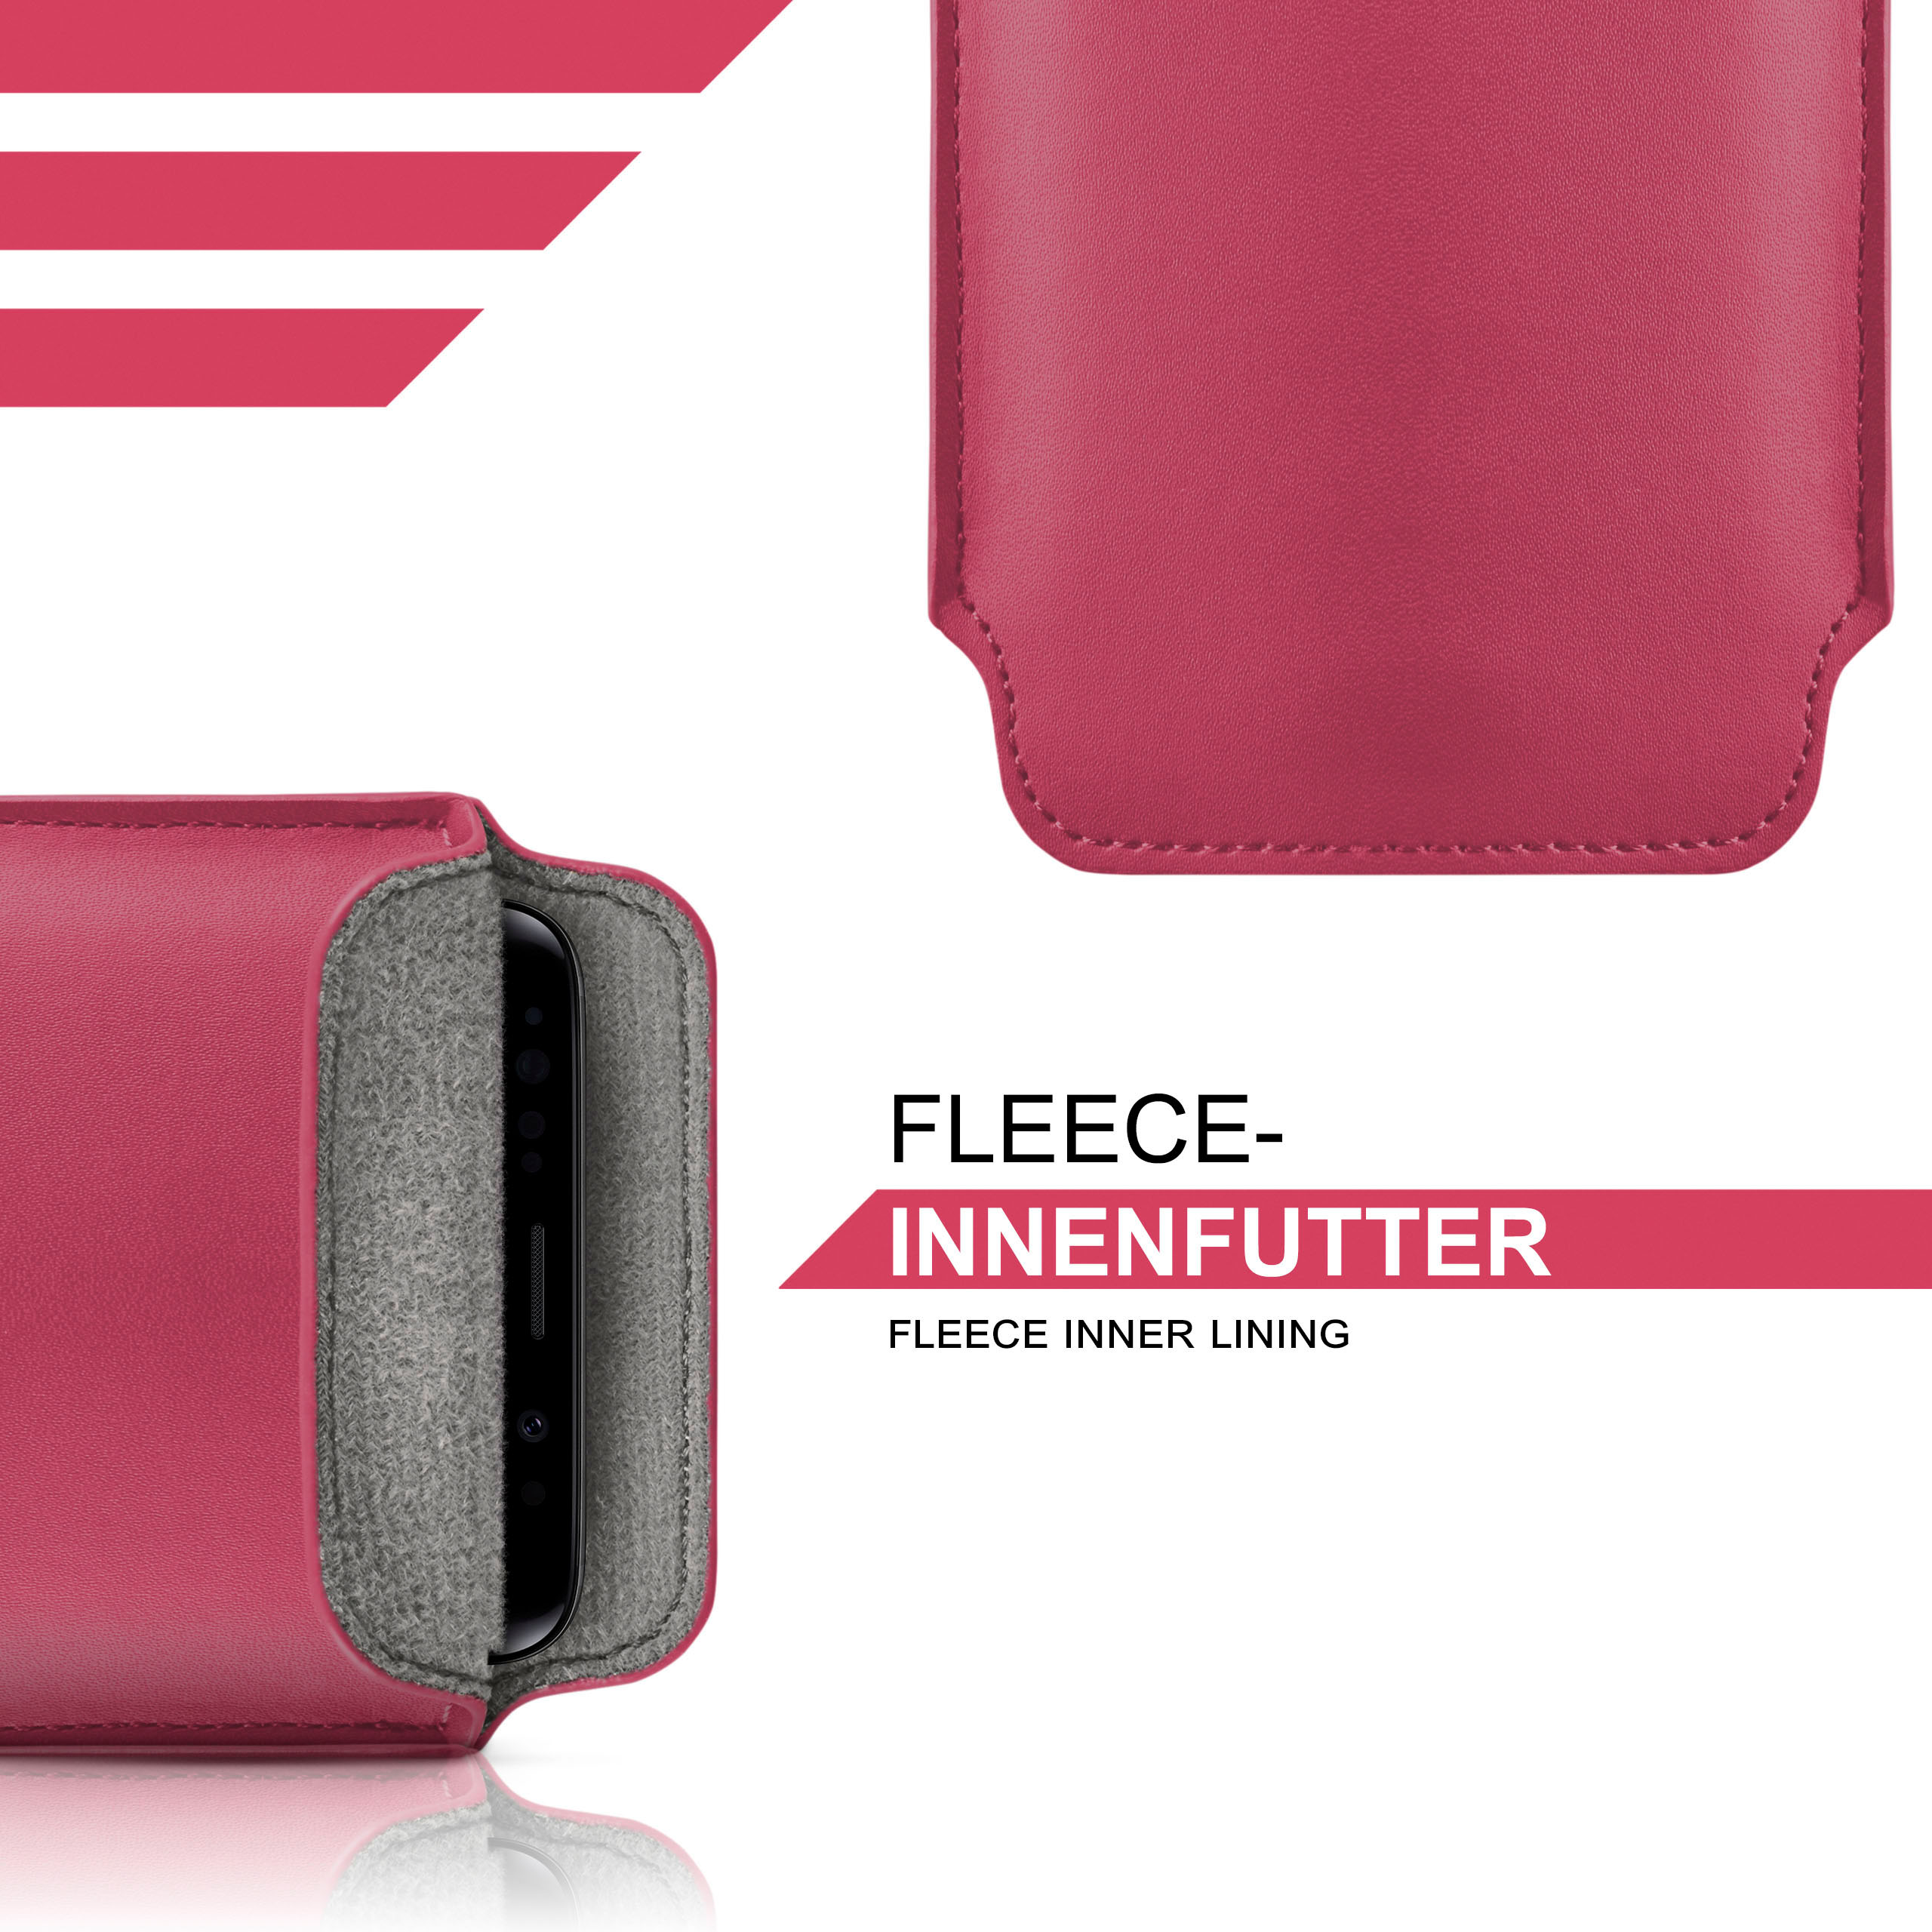 Berry-Fuchsia Full MOEX Fit, G7 Slide G7 LG, Case, Cover, ThinQ /